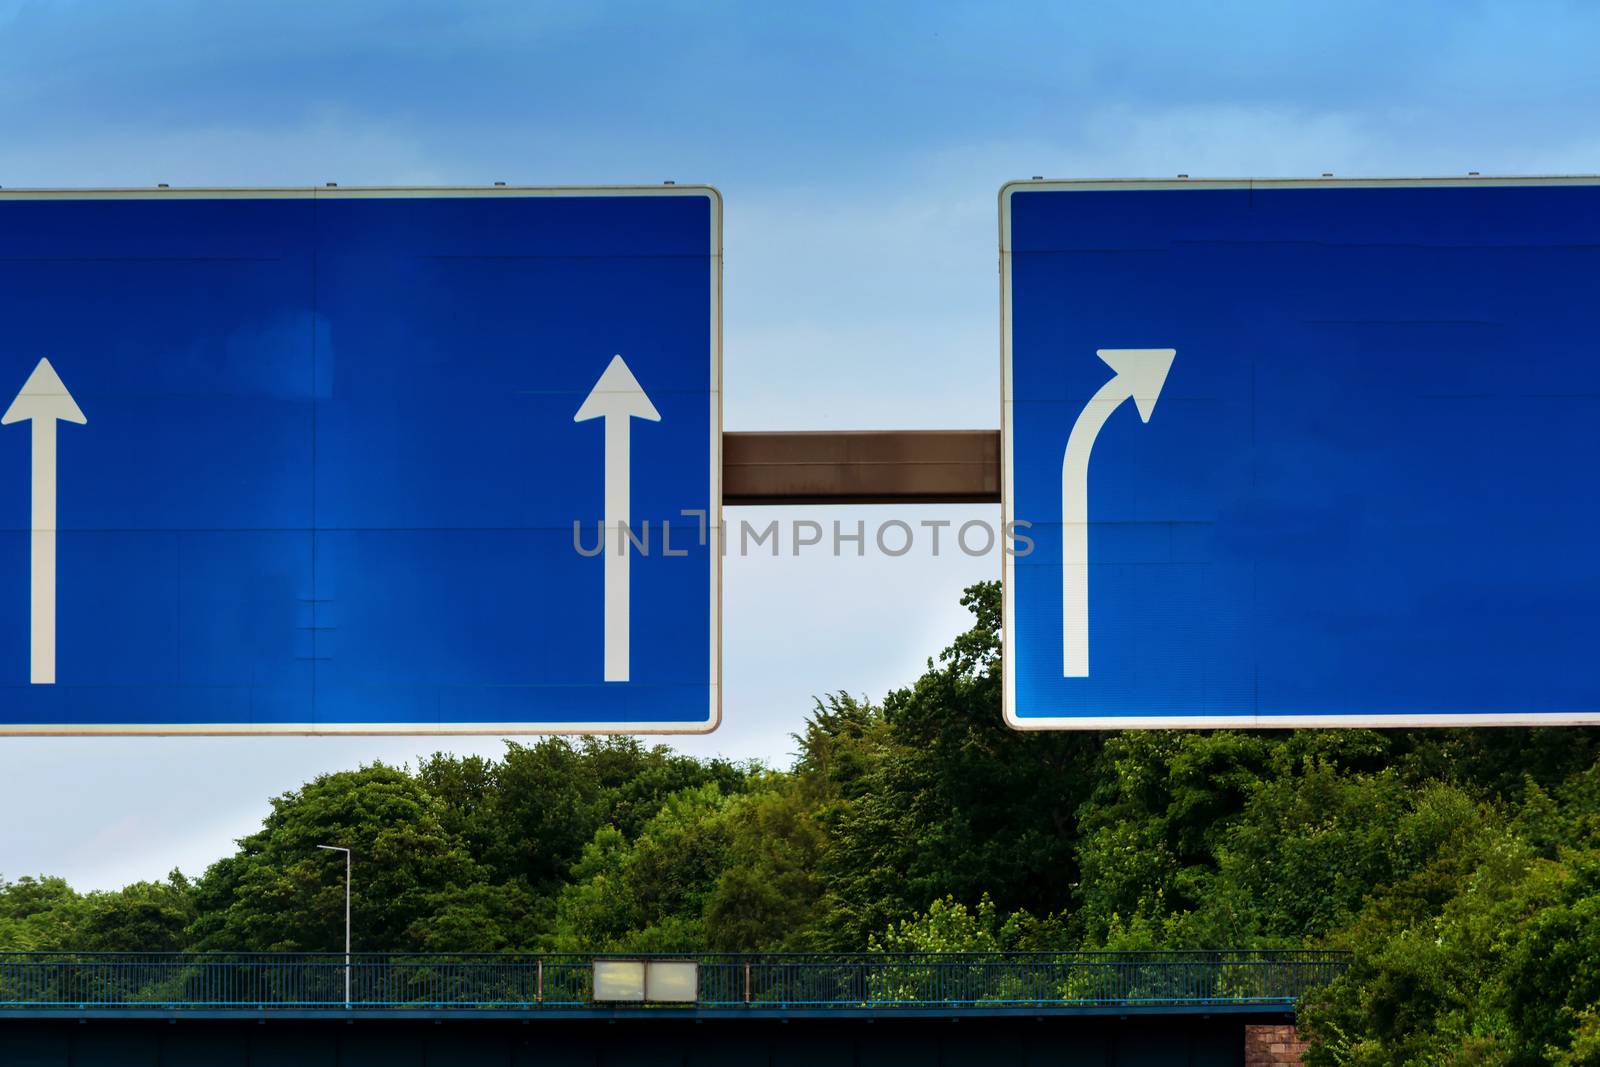 Highway sign, directional sign on the motorway A 3, direction Venlo, Duisburg, Essen, Muelheim an der Ruhr, Oberhausen, Arnhem and Highway crossing Kaiserberg.